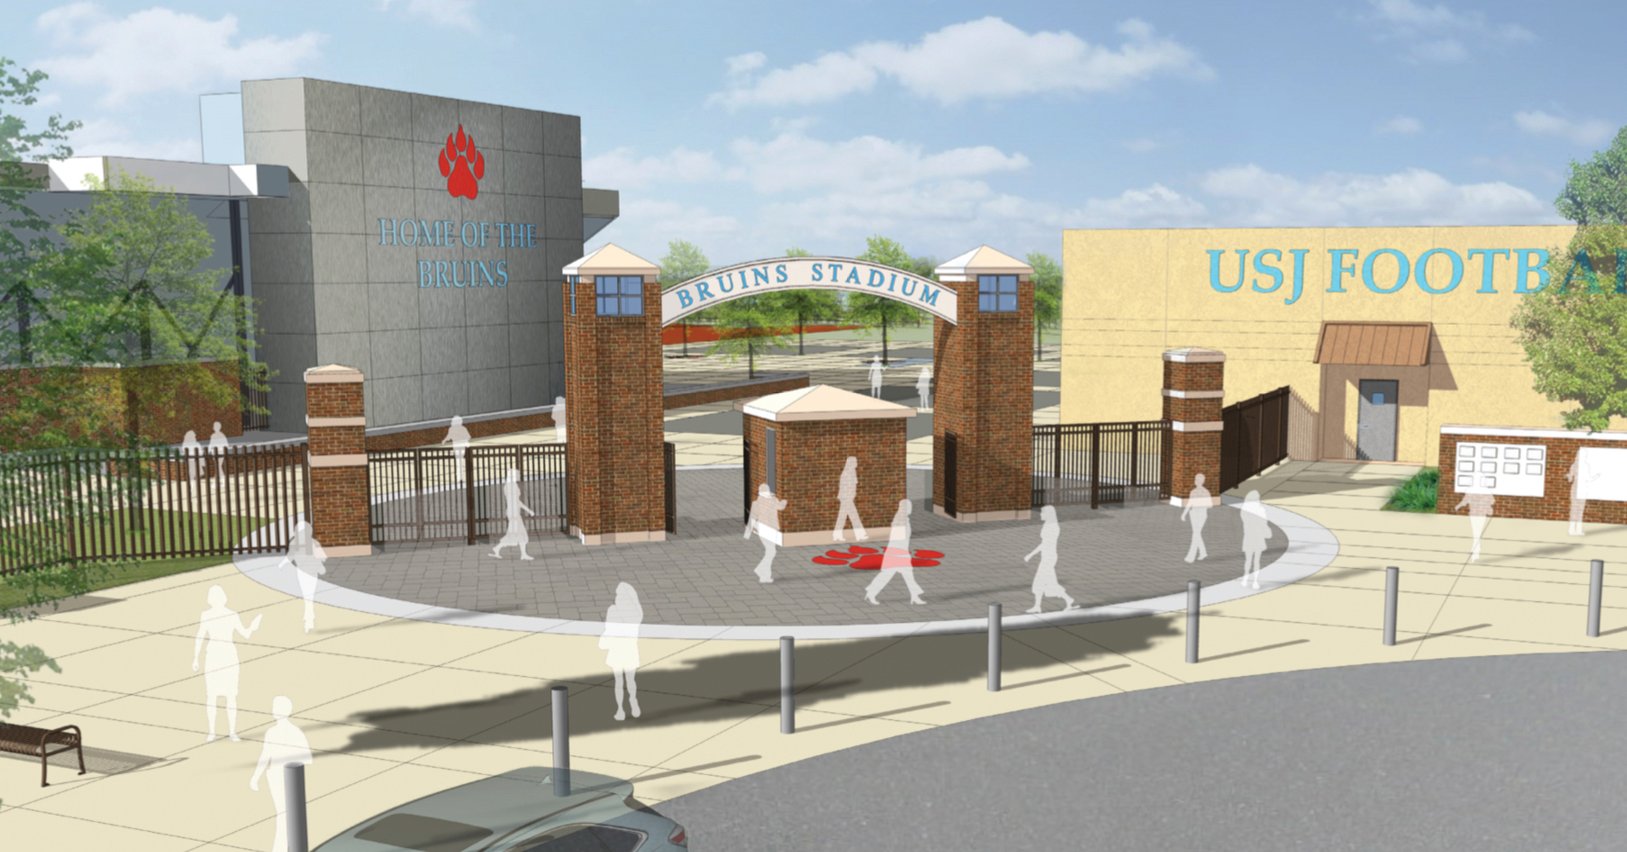 University School of Jackson unveils new 'Imagine More' master plan